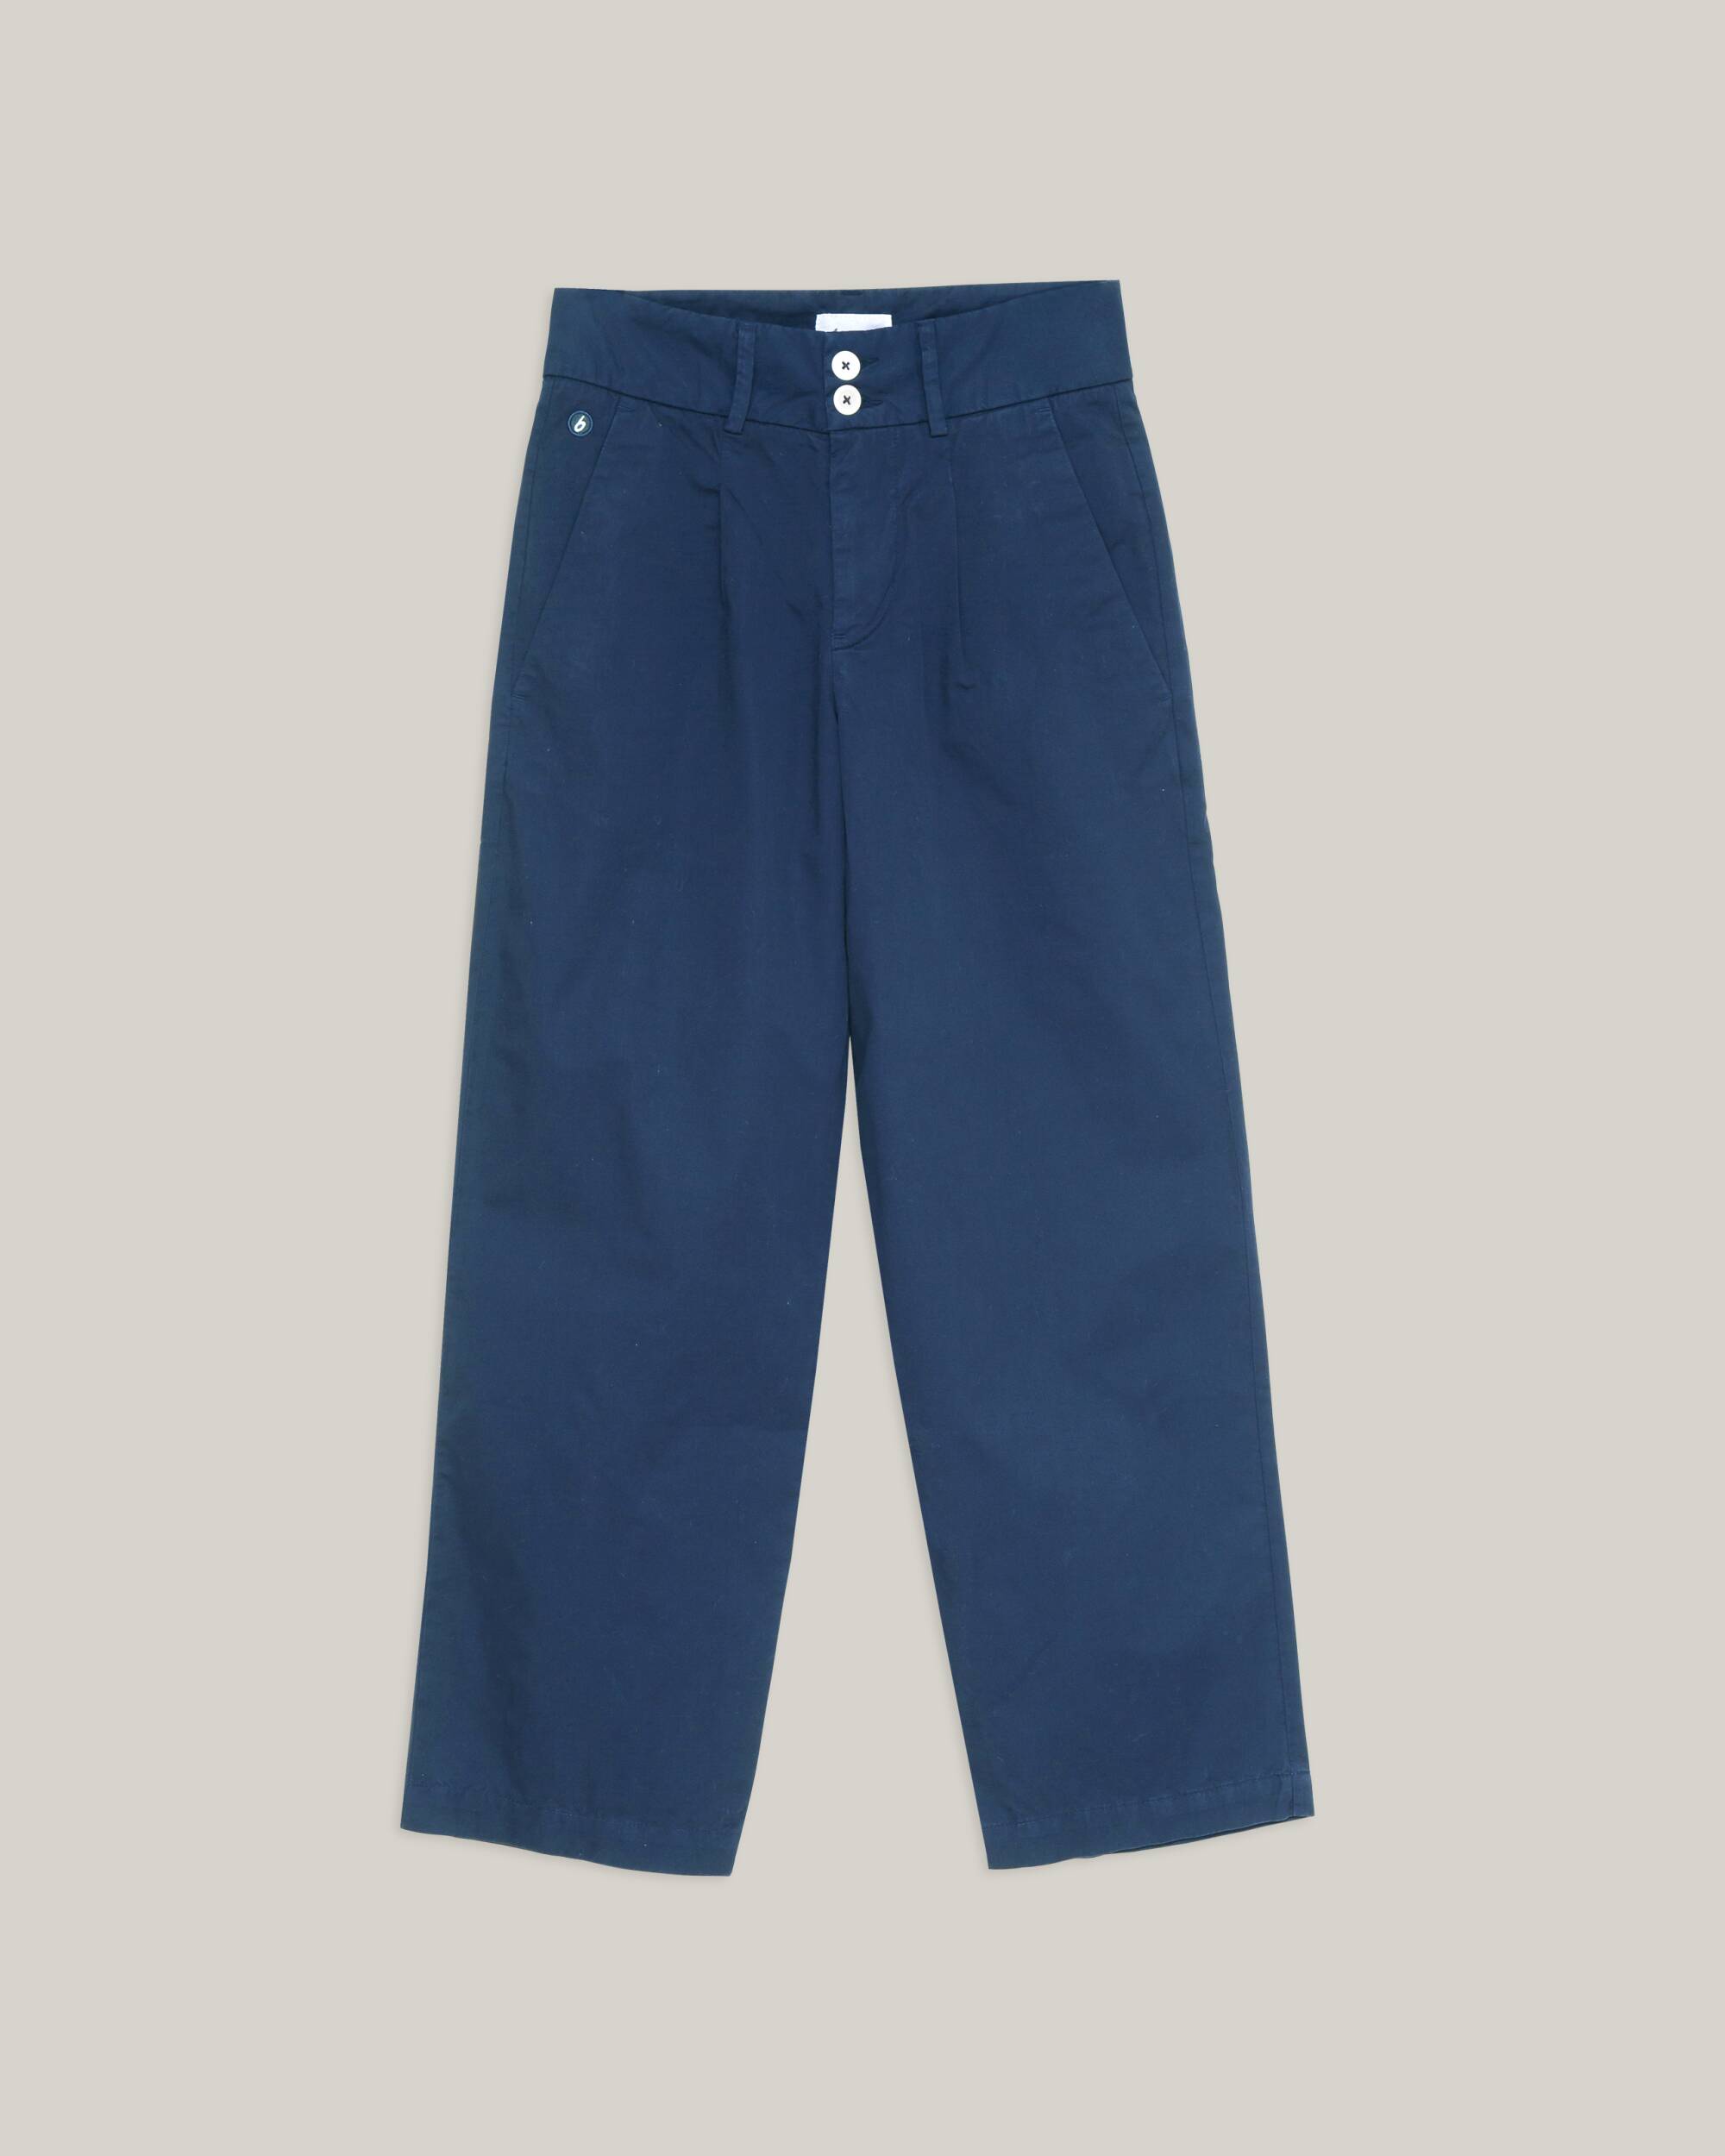 Dark blue chino trousers made from 100% organic cotton from Brava Fabrics